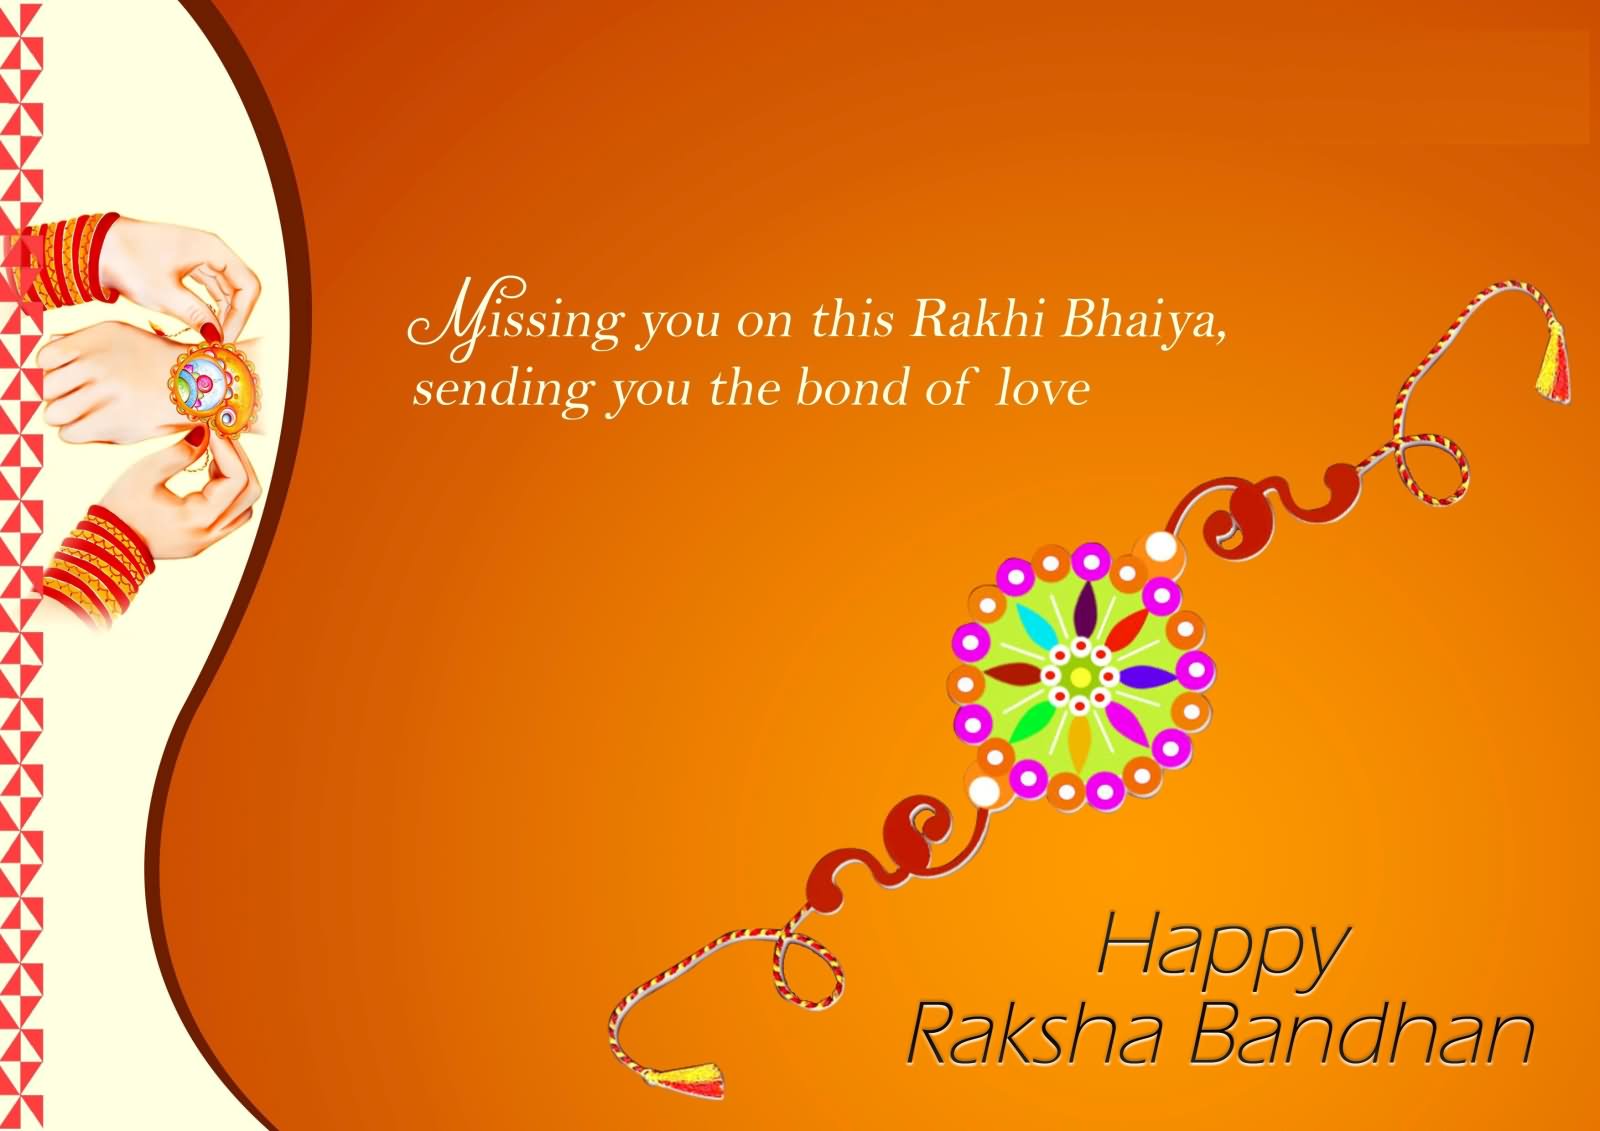 Missing You On This Rakhi Bhaiya Sending You The Bond Of Love Happy Raksha Bandhan